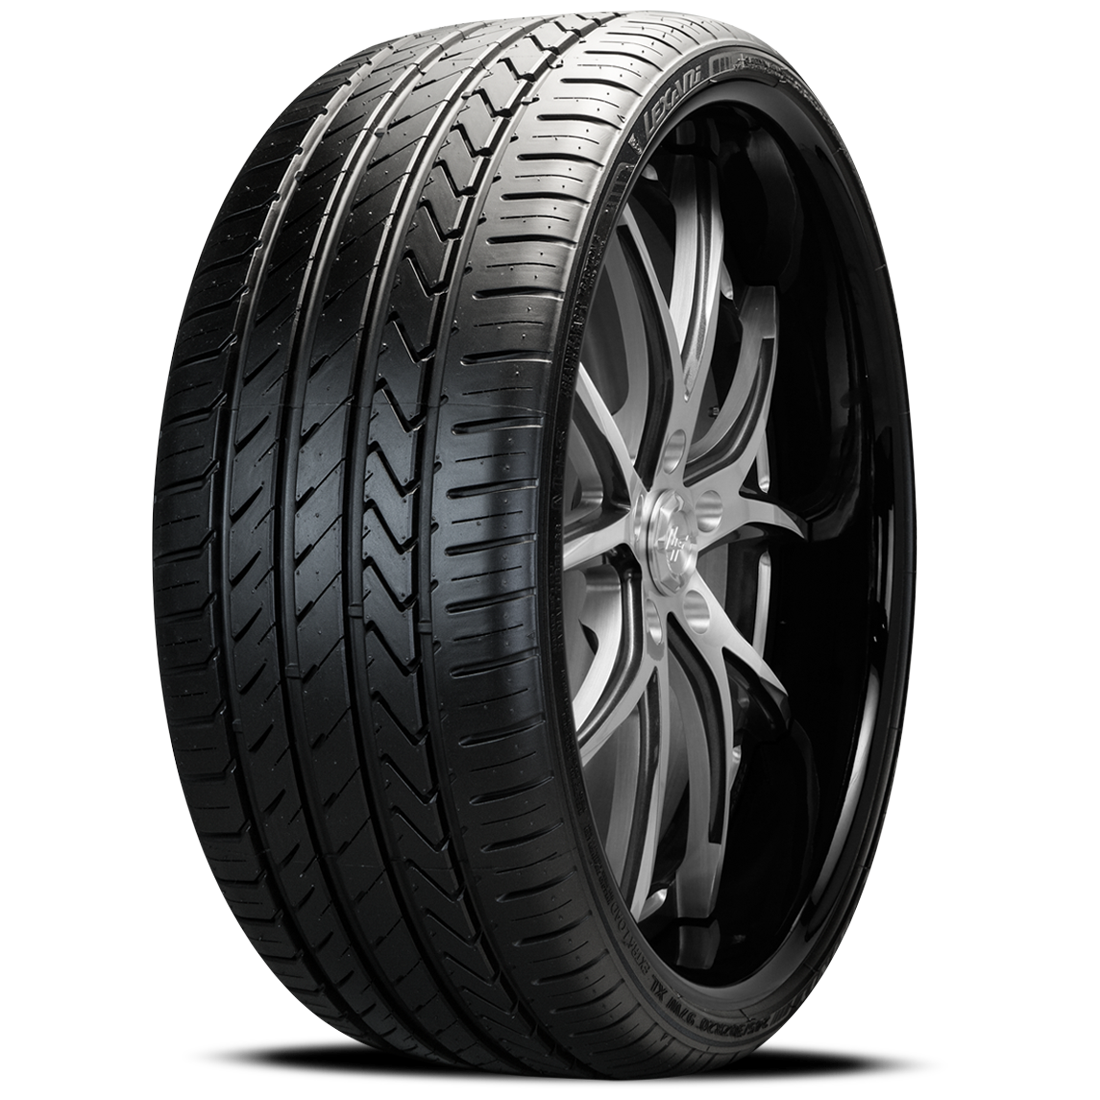 LEXANI LX-TWENTY 295/25ZR24 (29.6X11.6R 24) Tires